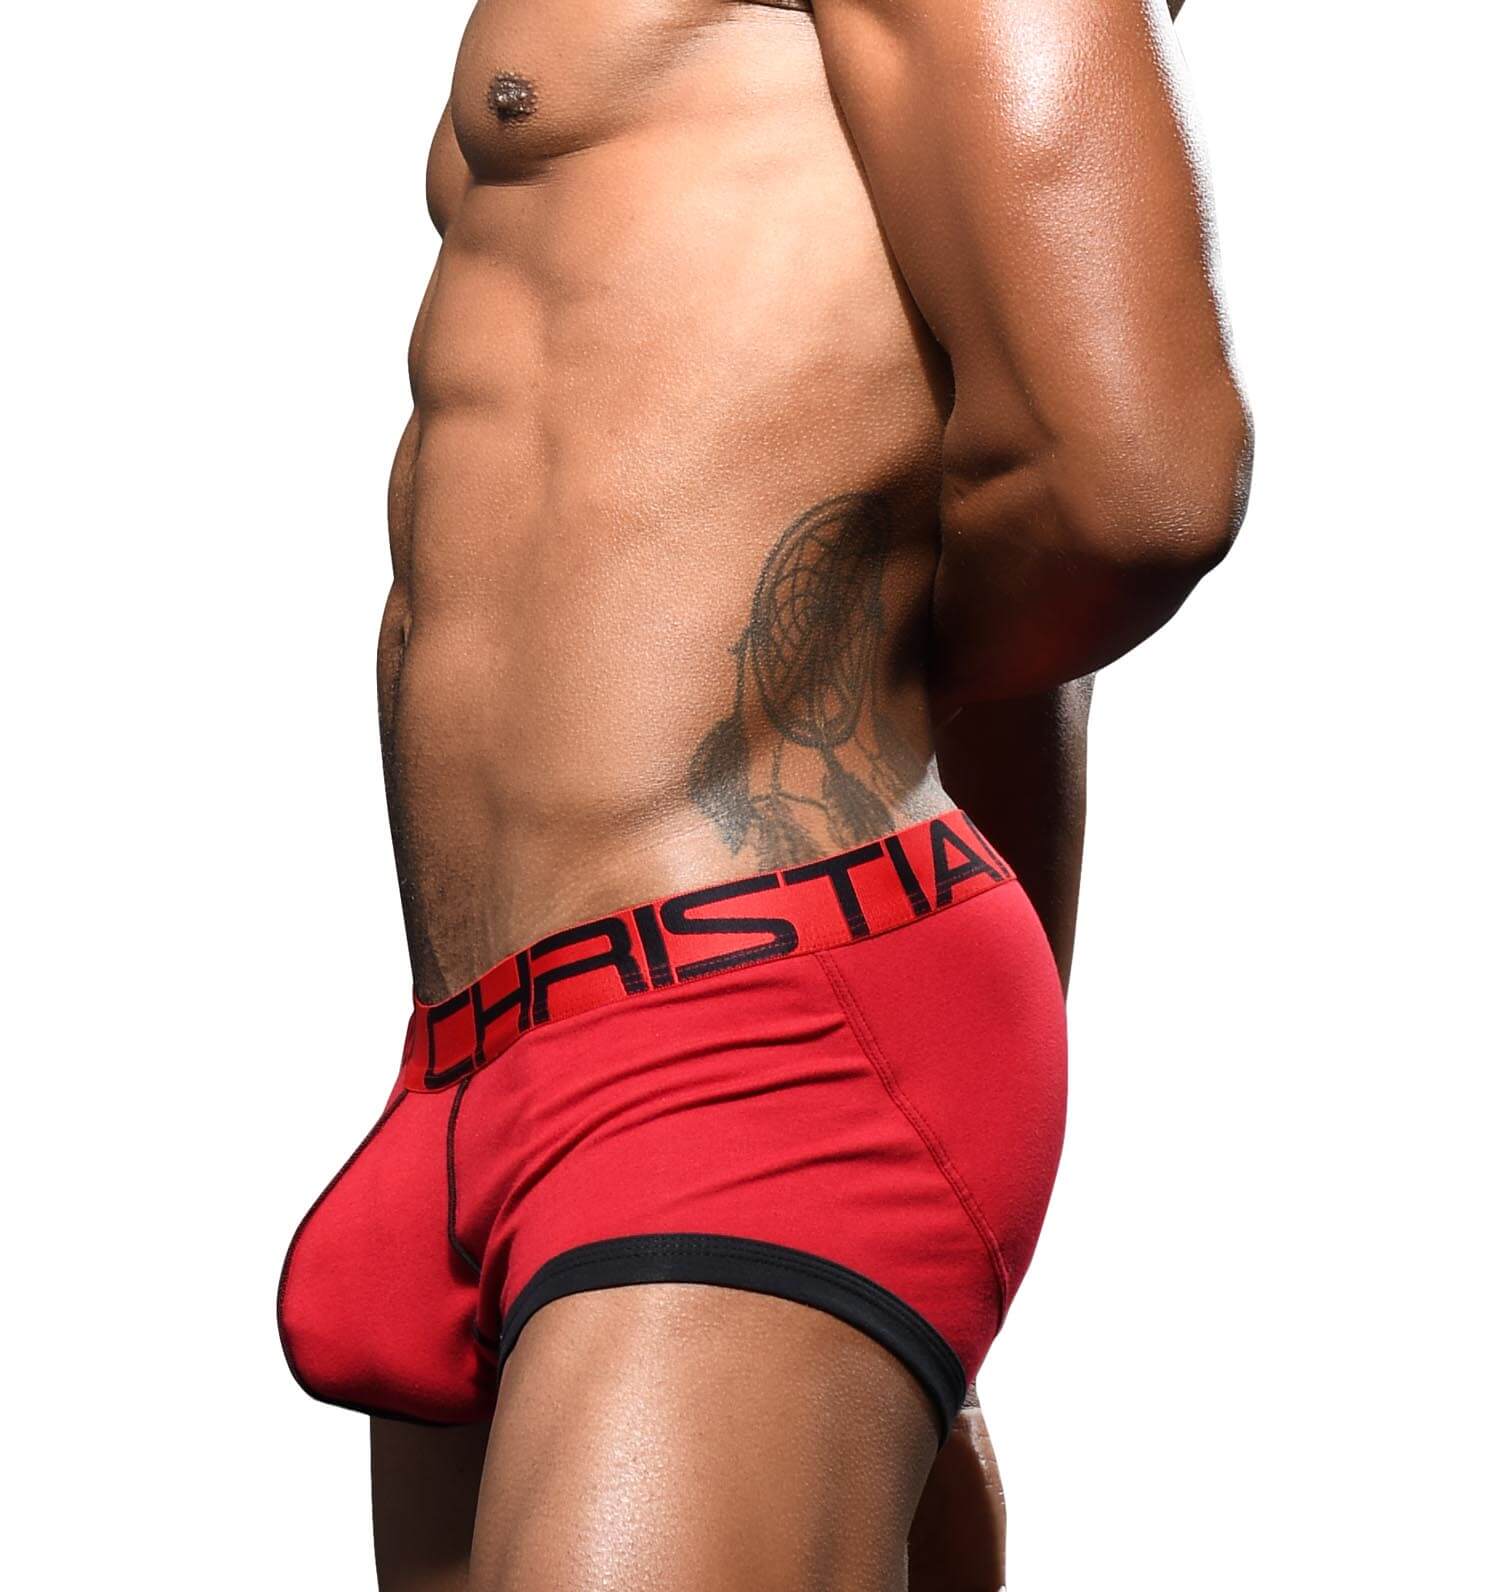 rote Andrew Christian 'FLASHLIFT' Boxershorts mit doppelter Push-Up Funktion, Seitenansicht